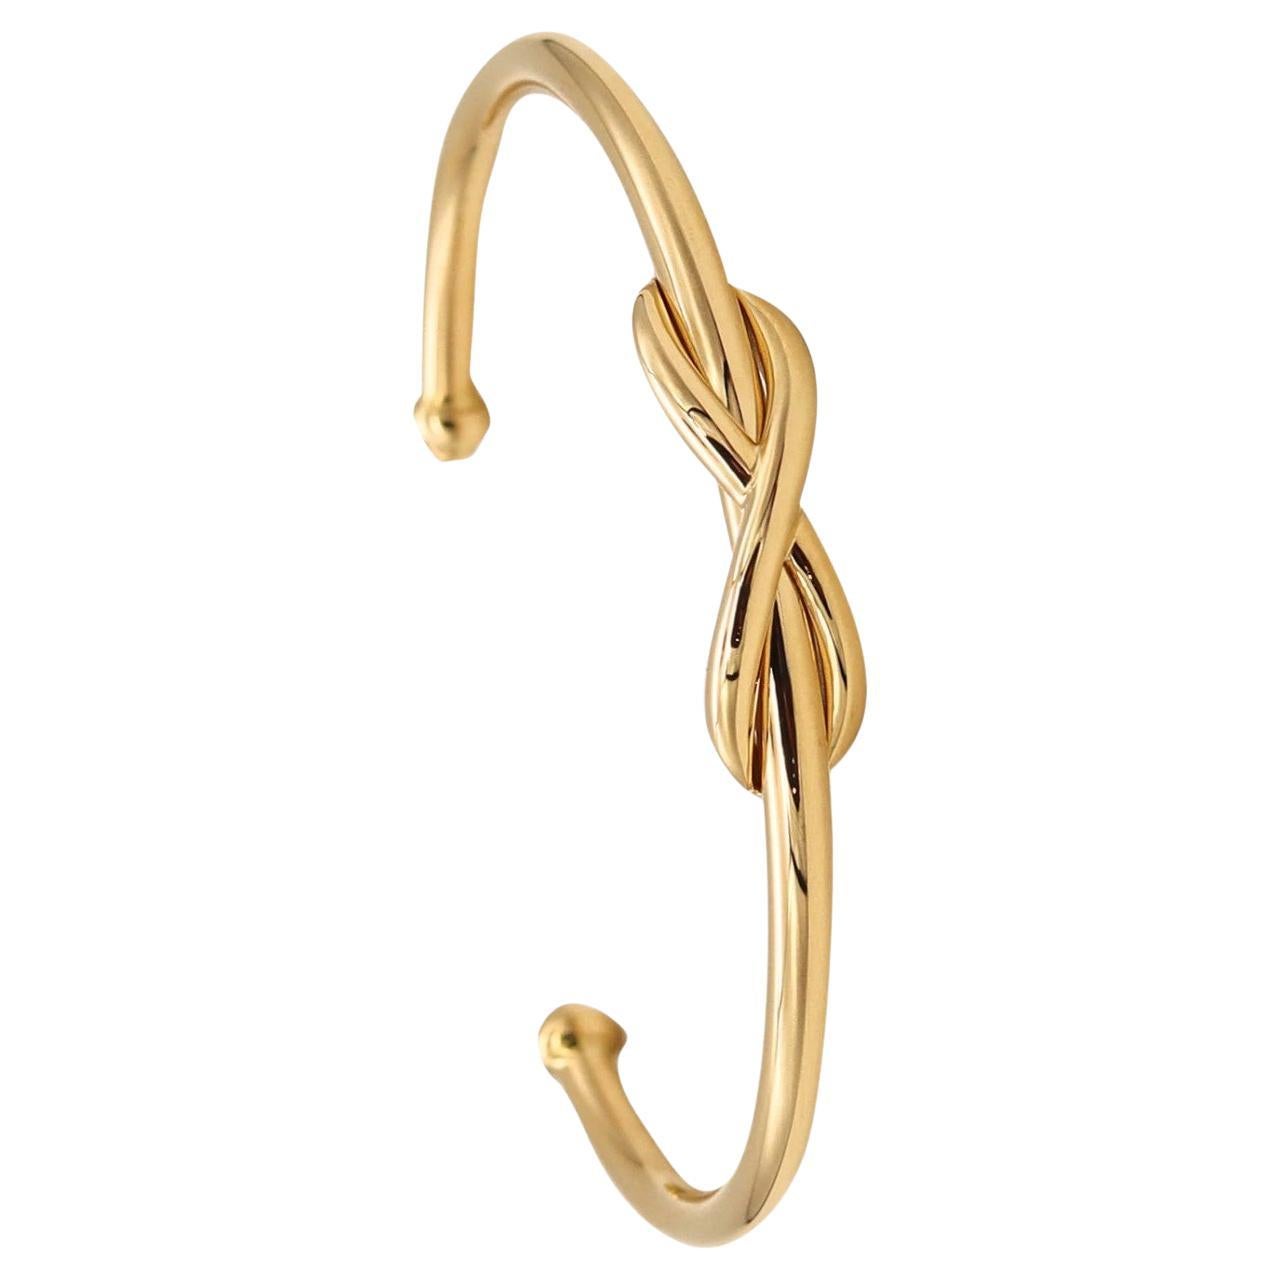 Tiffany & Co. Infinity Motif Cuff Bracelet in Solid 18Kt Yellow Gold